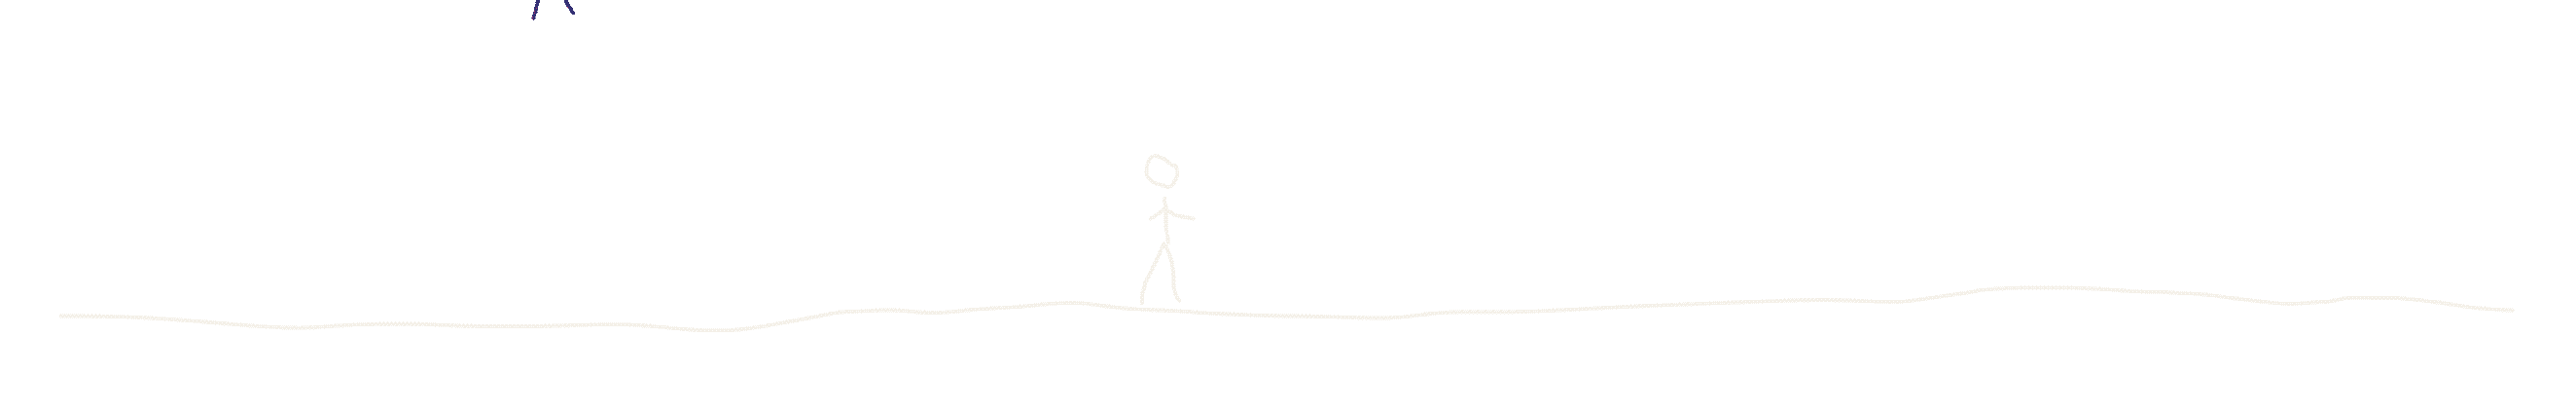 A long flat line with a single stick figure it its center.